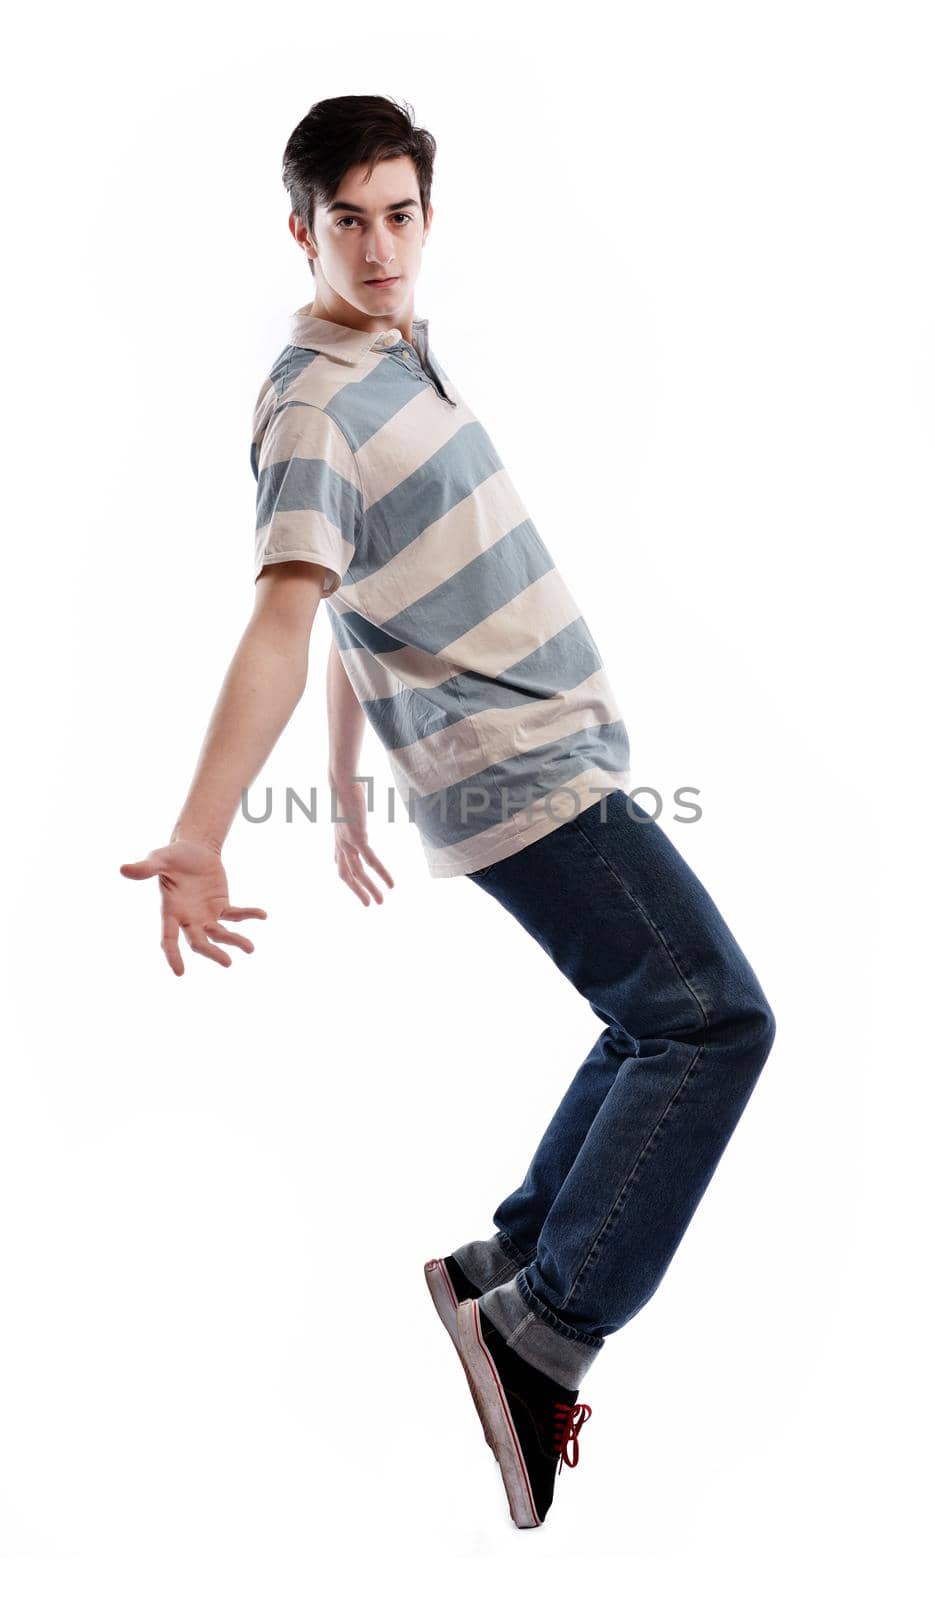 young man dancing by dotshock